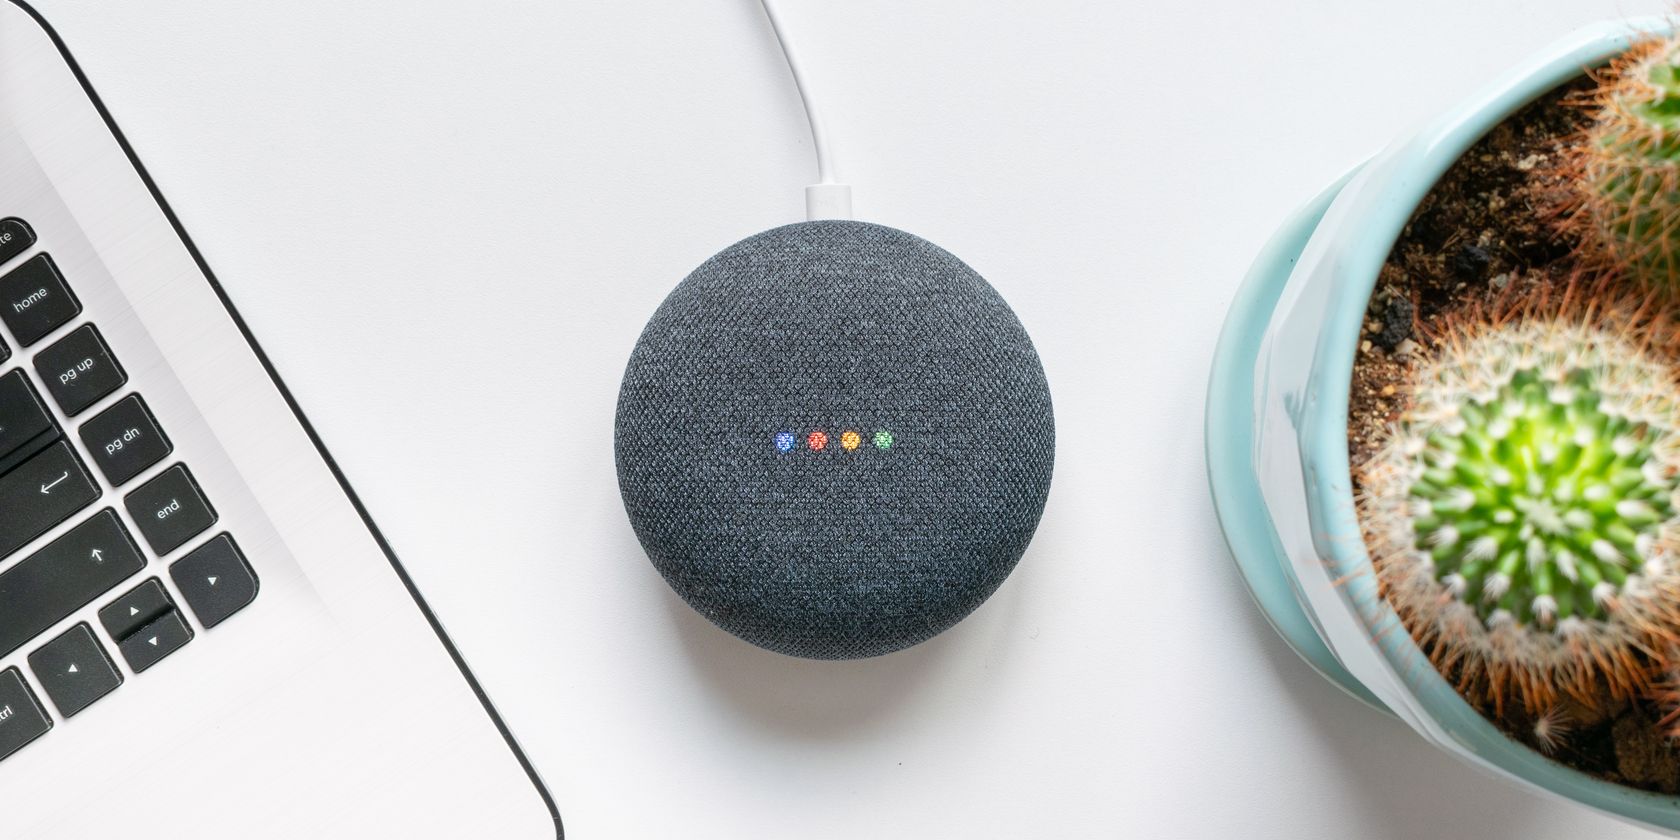 A Google Home speaker